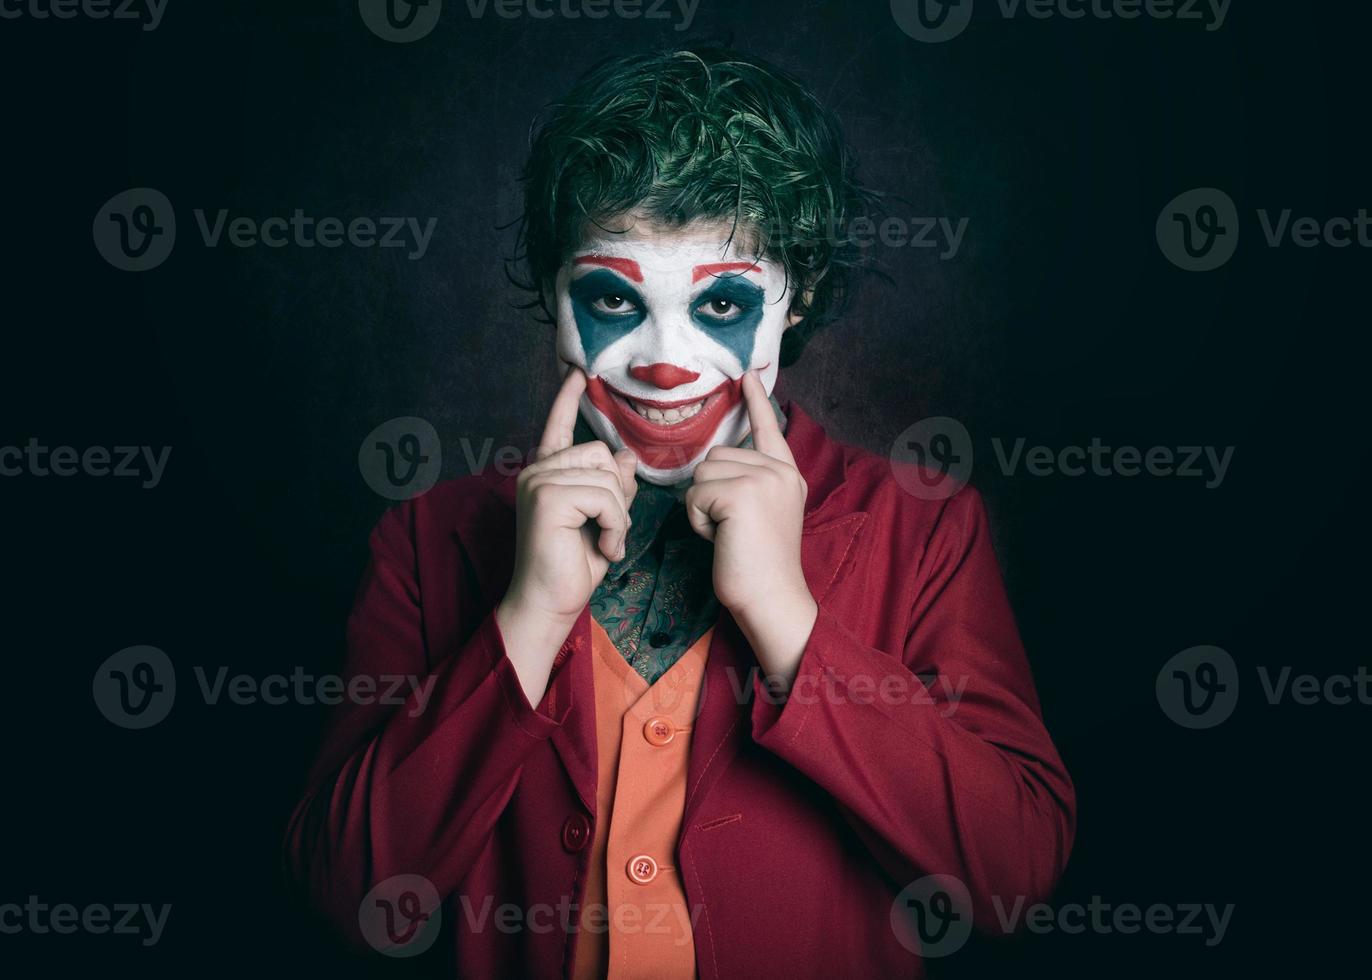 Junge als Joker verkleidet foto